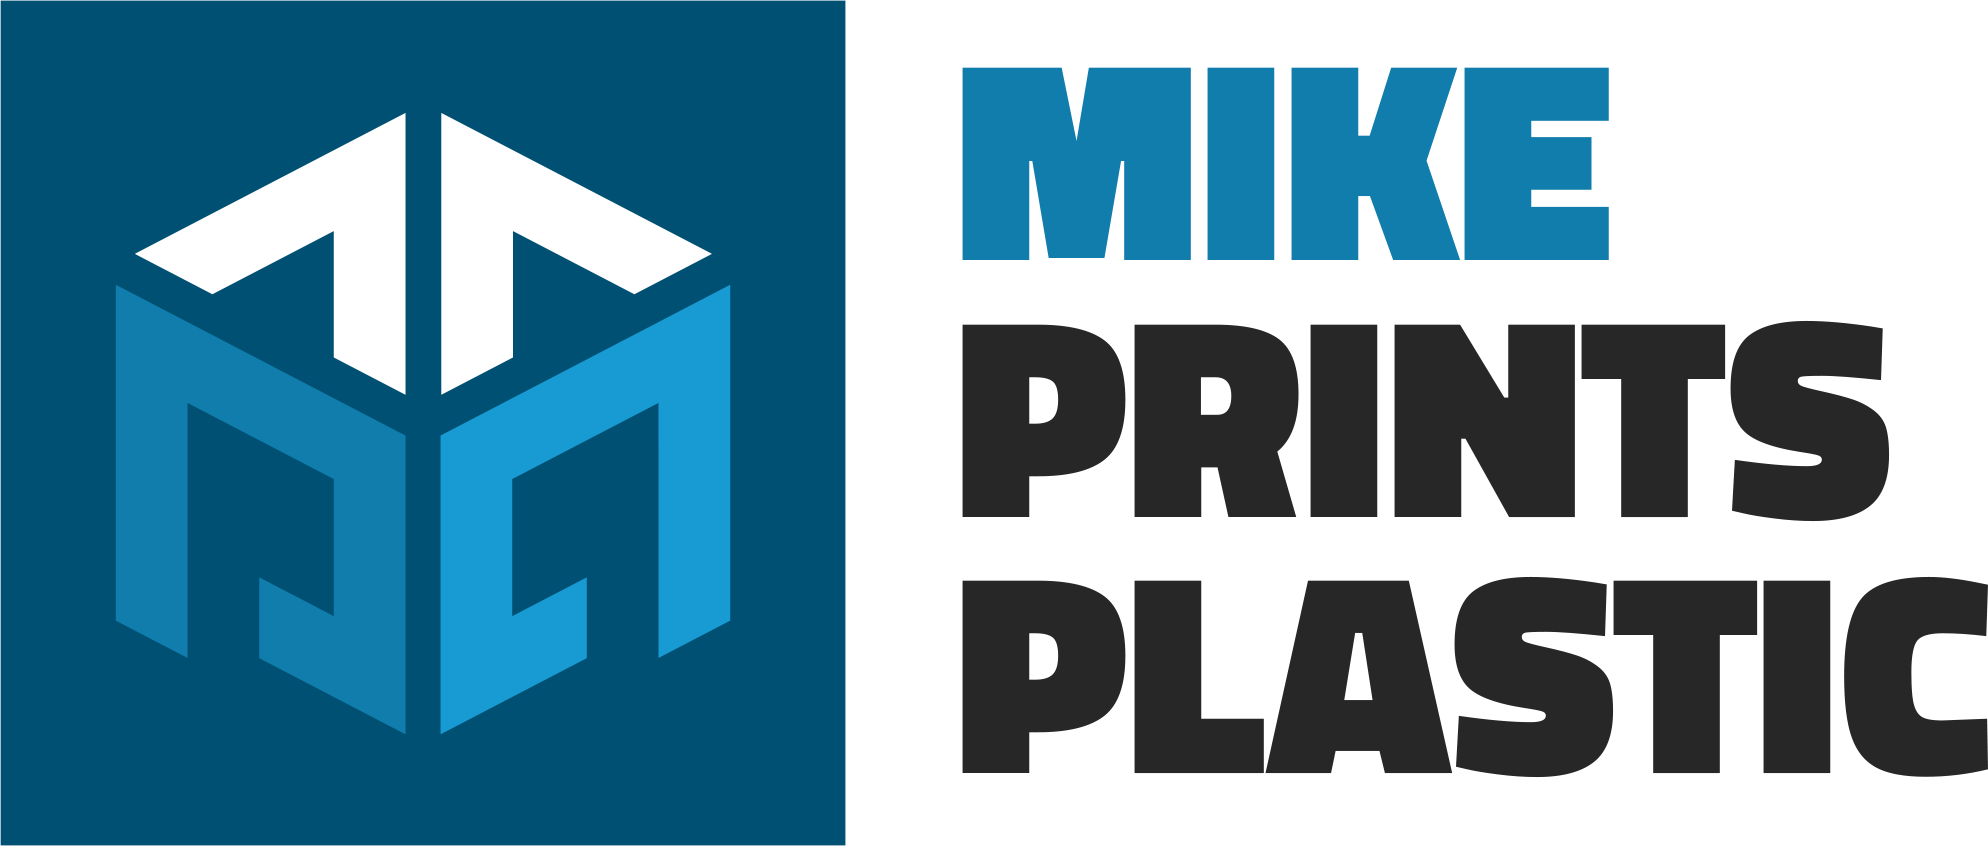 Mike Prints Plastic